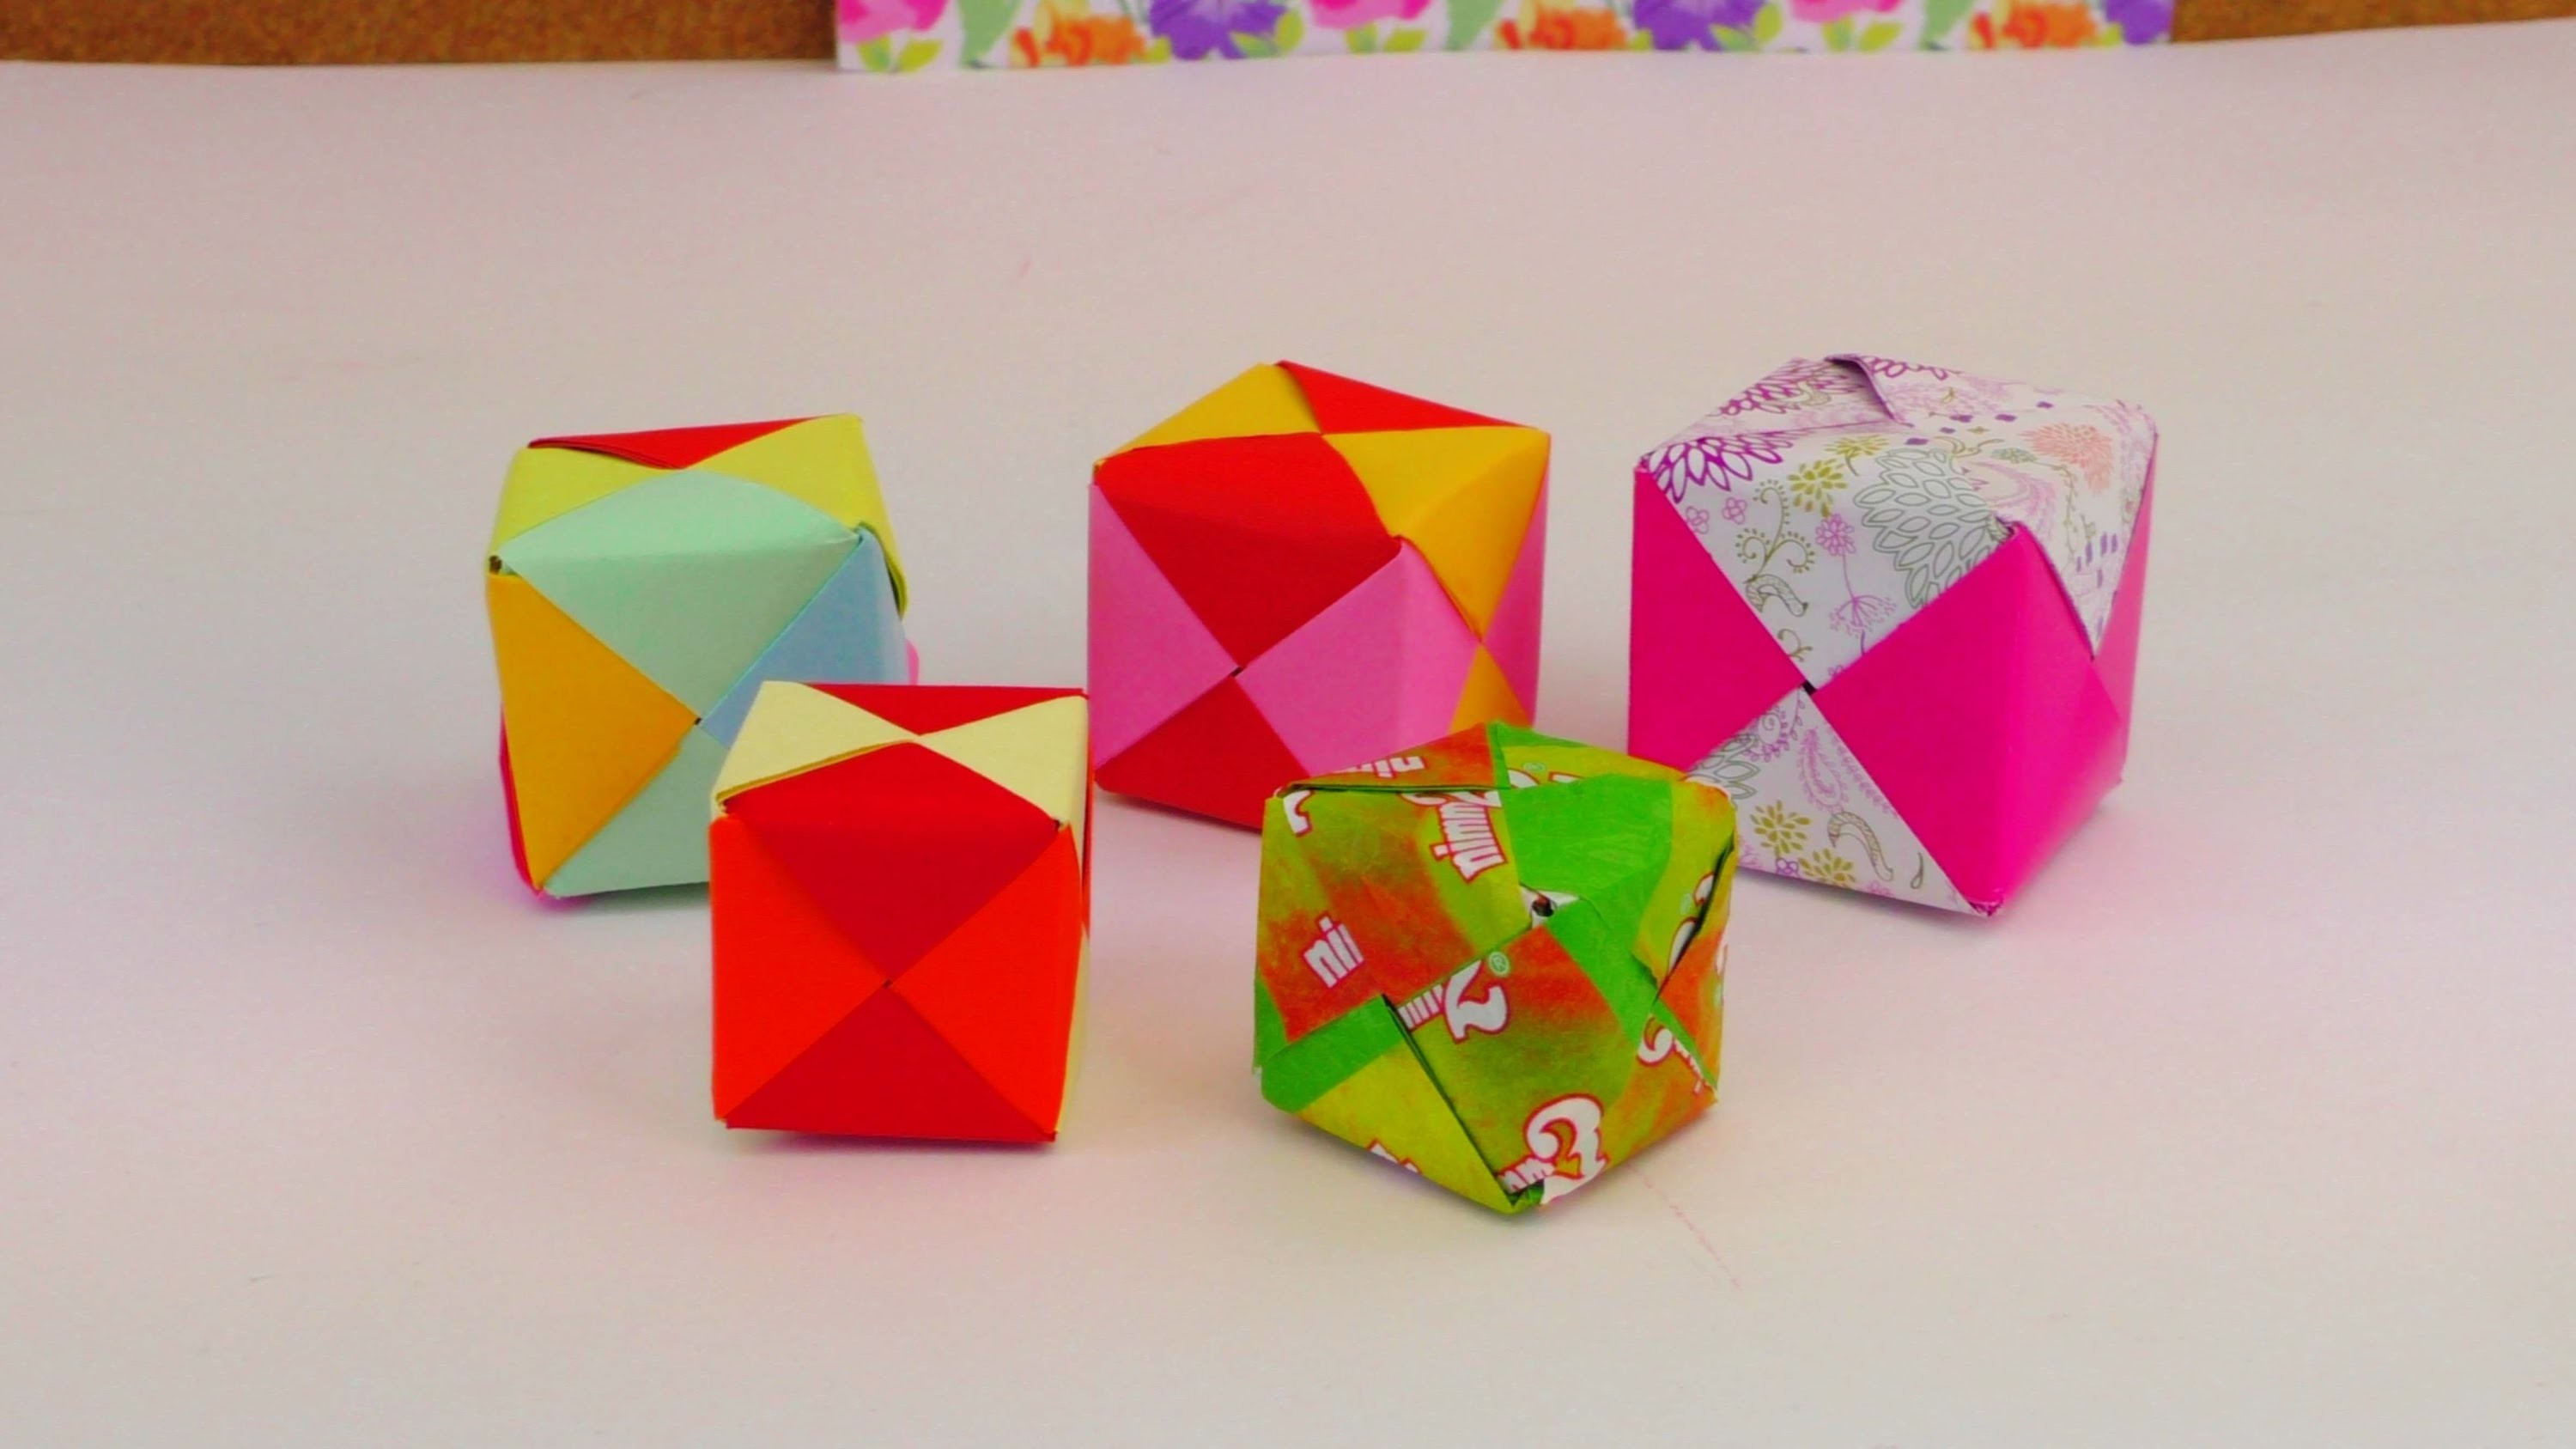 ORIGAMI WÜRFEL DIY. Cube Origami Tutorial How To. Würfel Falten Anleitung deutsch